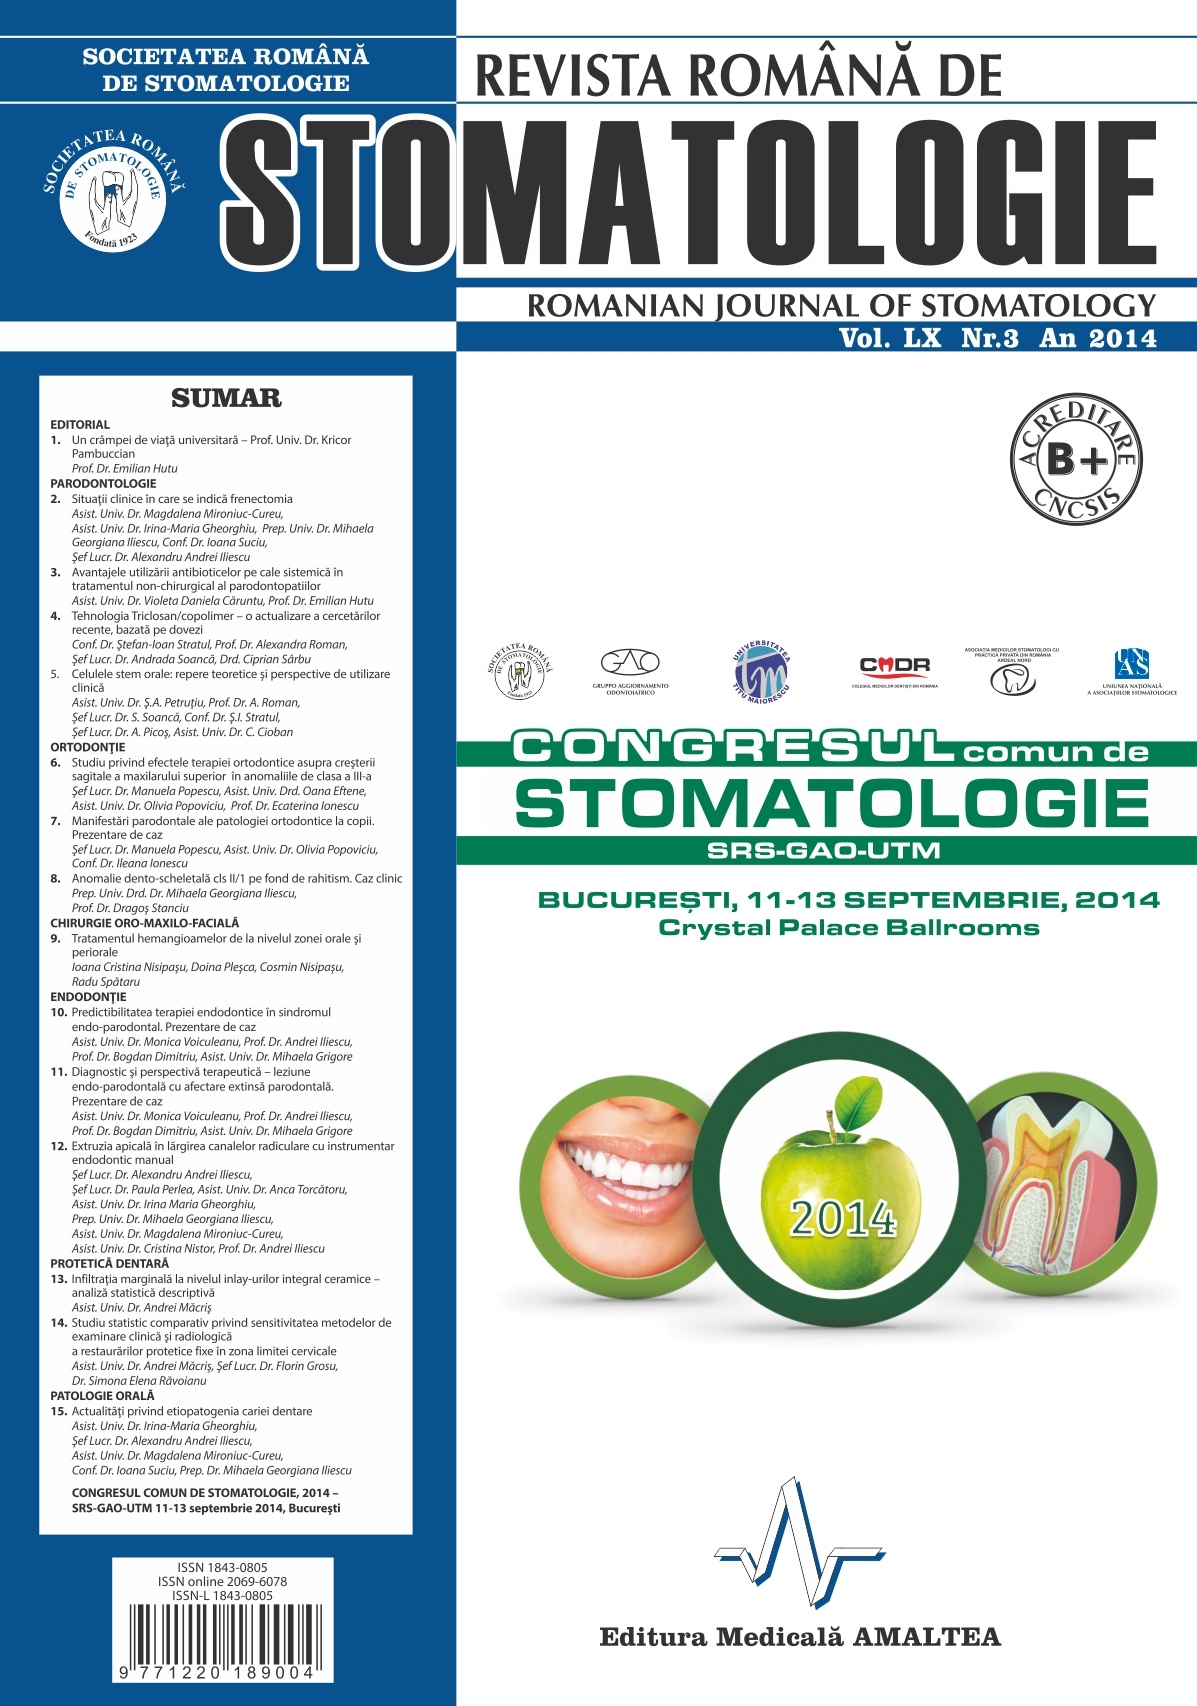 Revista Romana de STOMATOLOGIE - Romanian Journal of Stomatology, Vol. LX, Nr. 3, An 2014